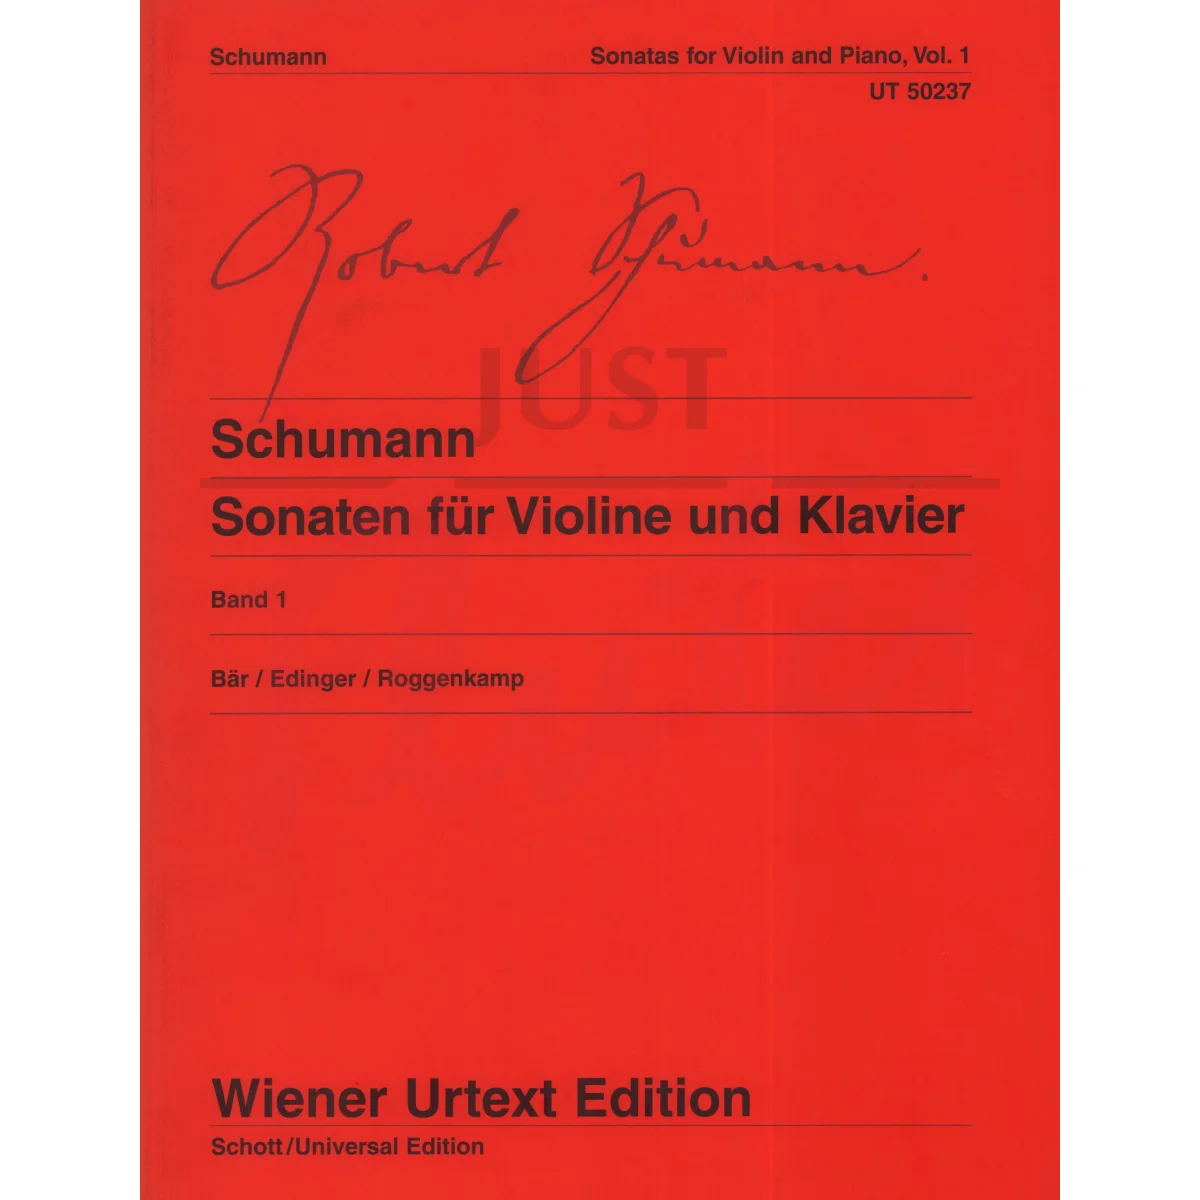 Sonatas for Violin and Piano, Vol 1